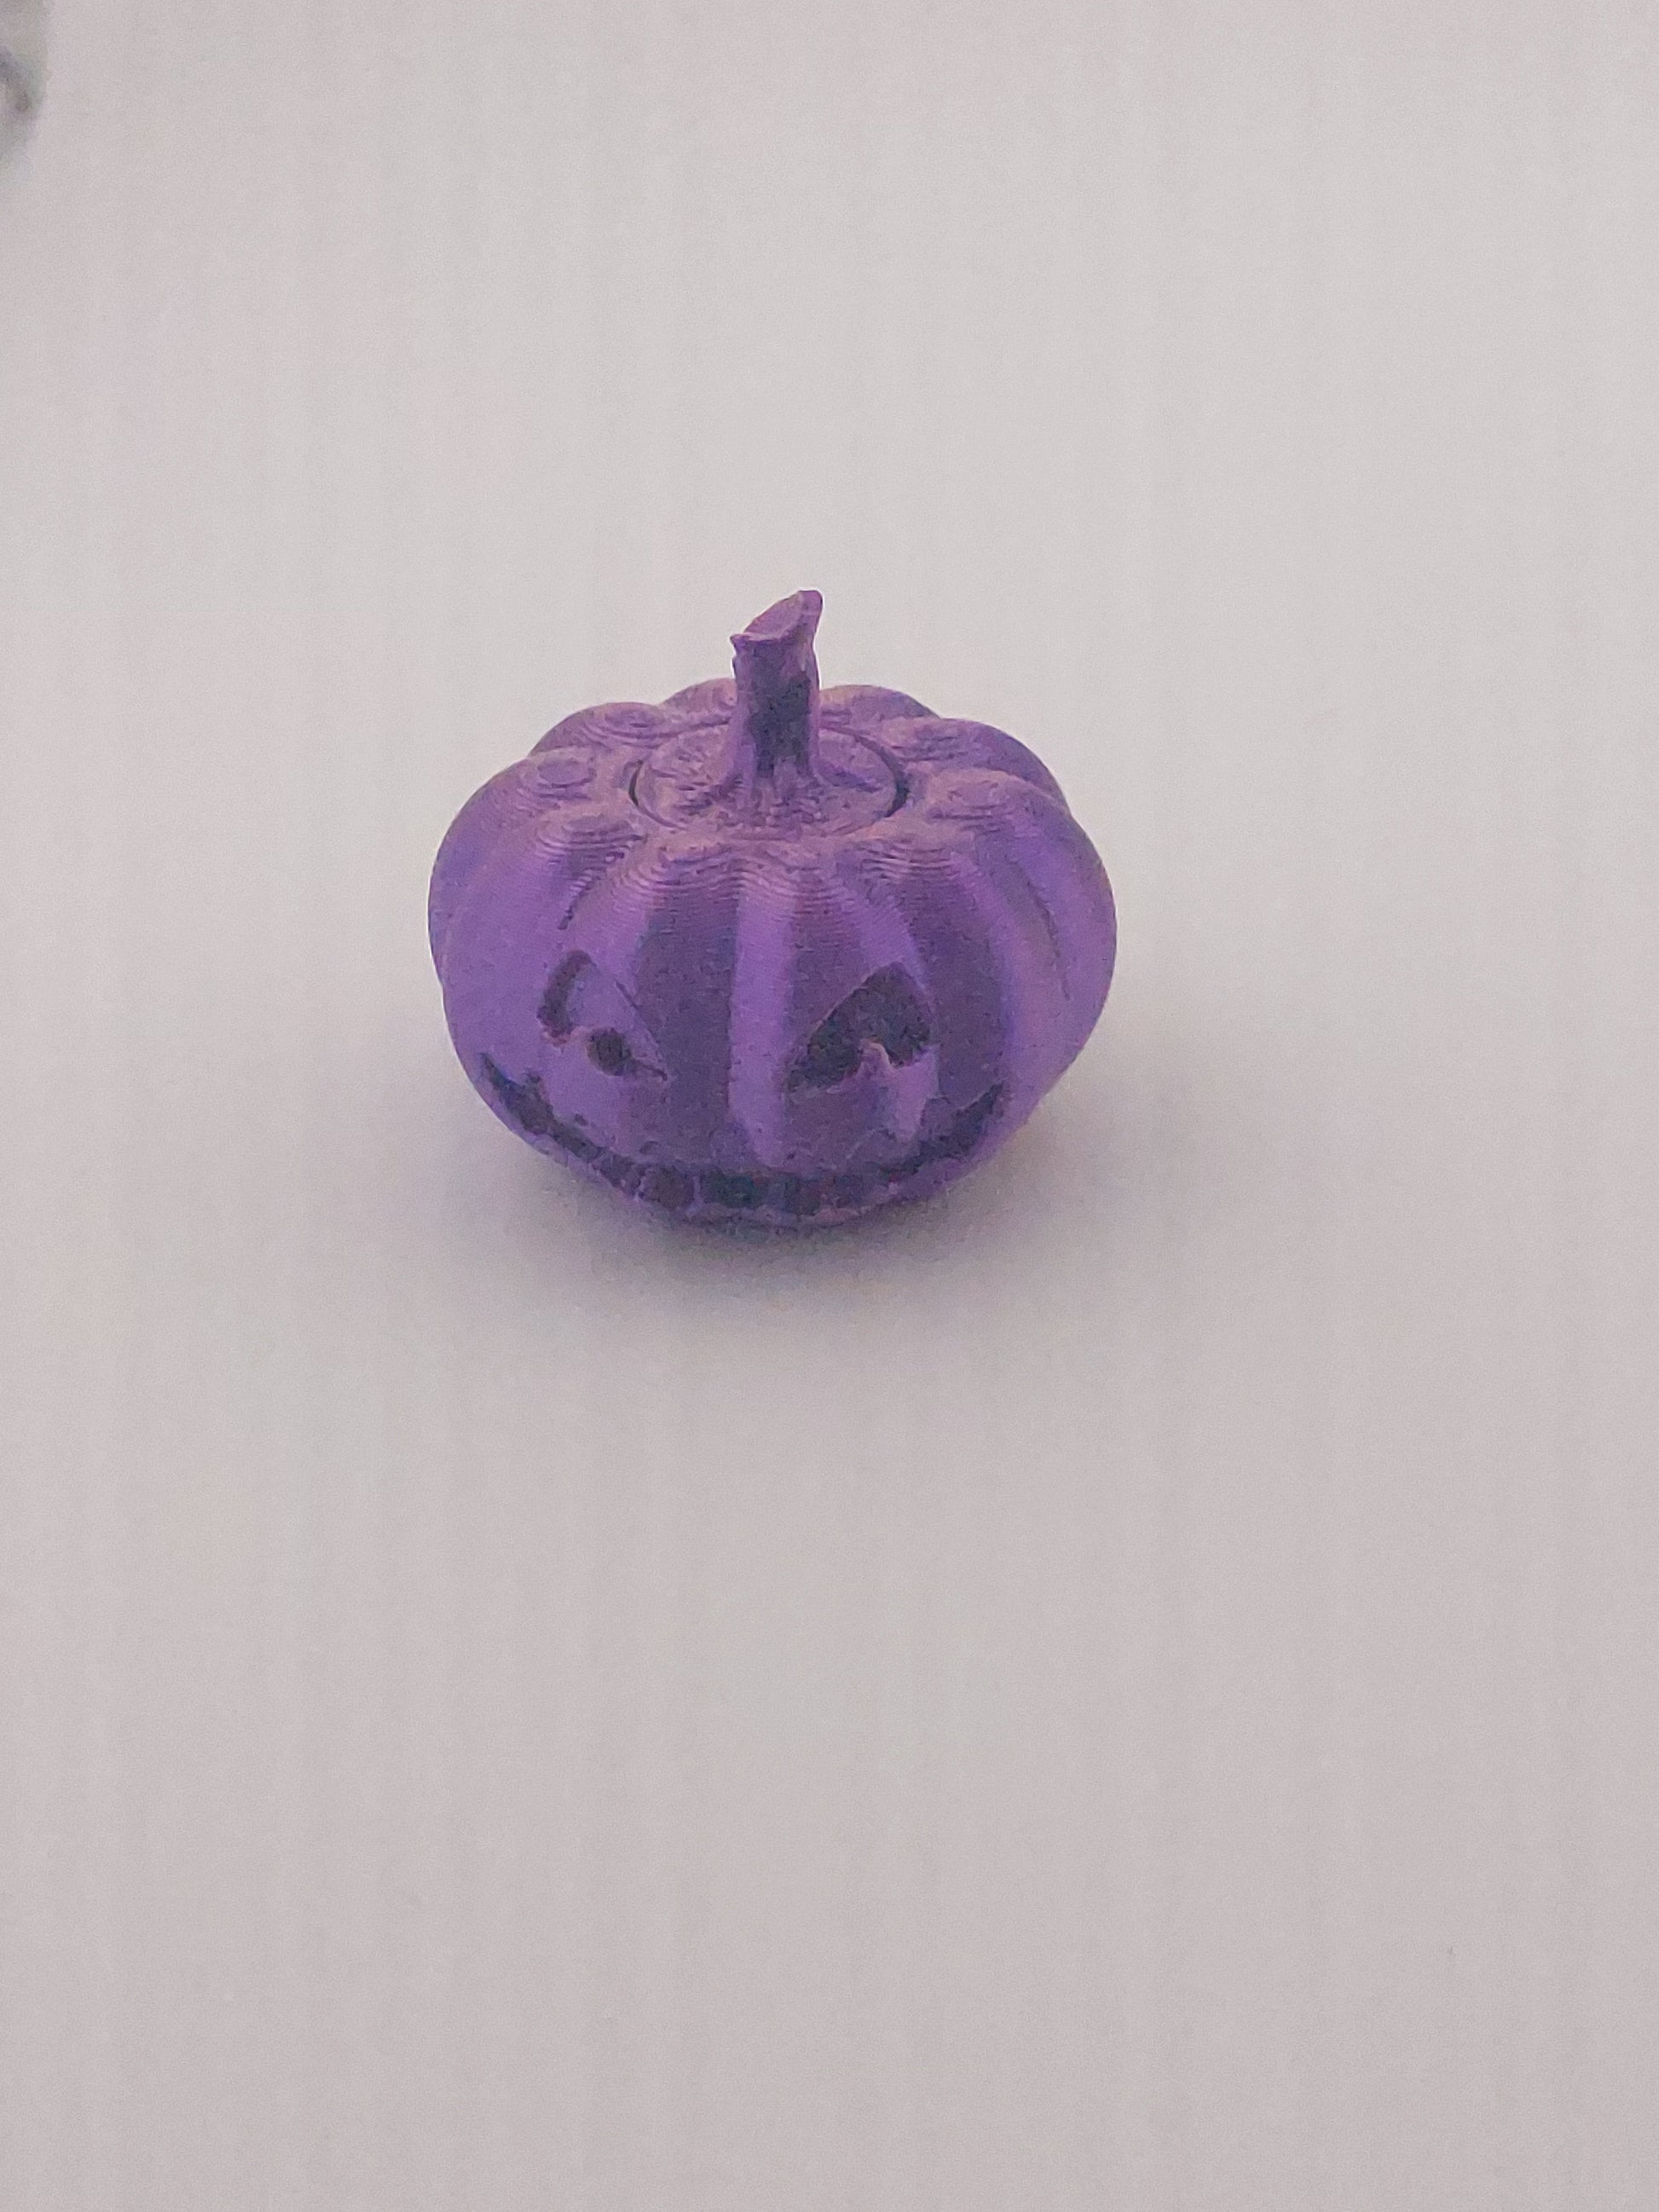 1 Articulated Fidget Pumpkin Spinner -- Decor Gift - 3D Printed Fidget Fantasy Creature - Customizable Colors - Authorized Seller